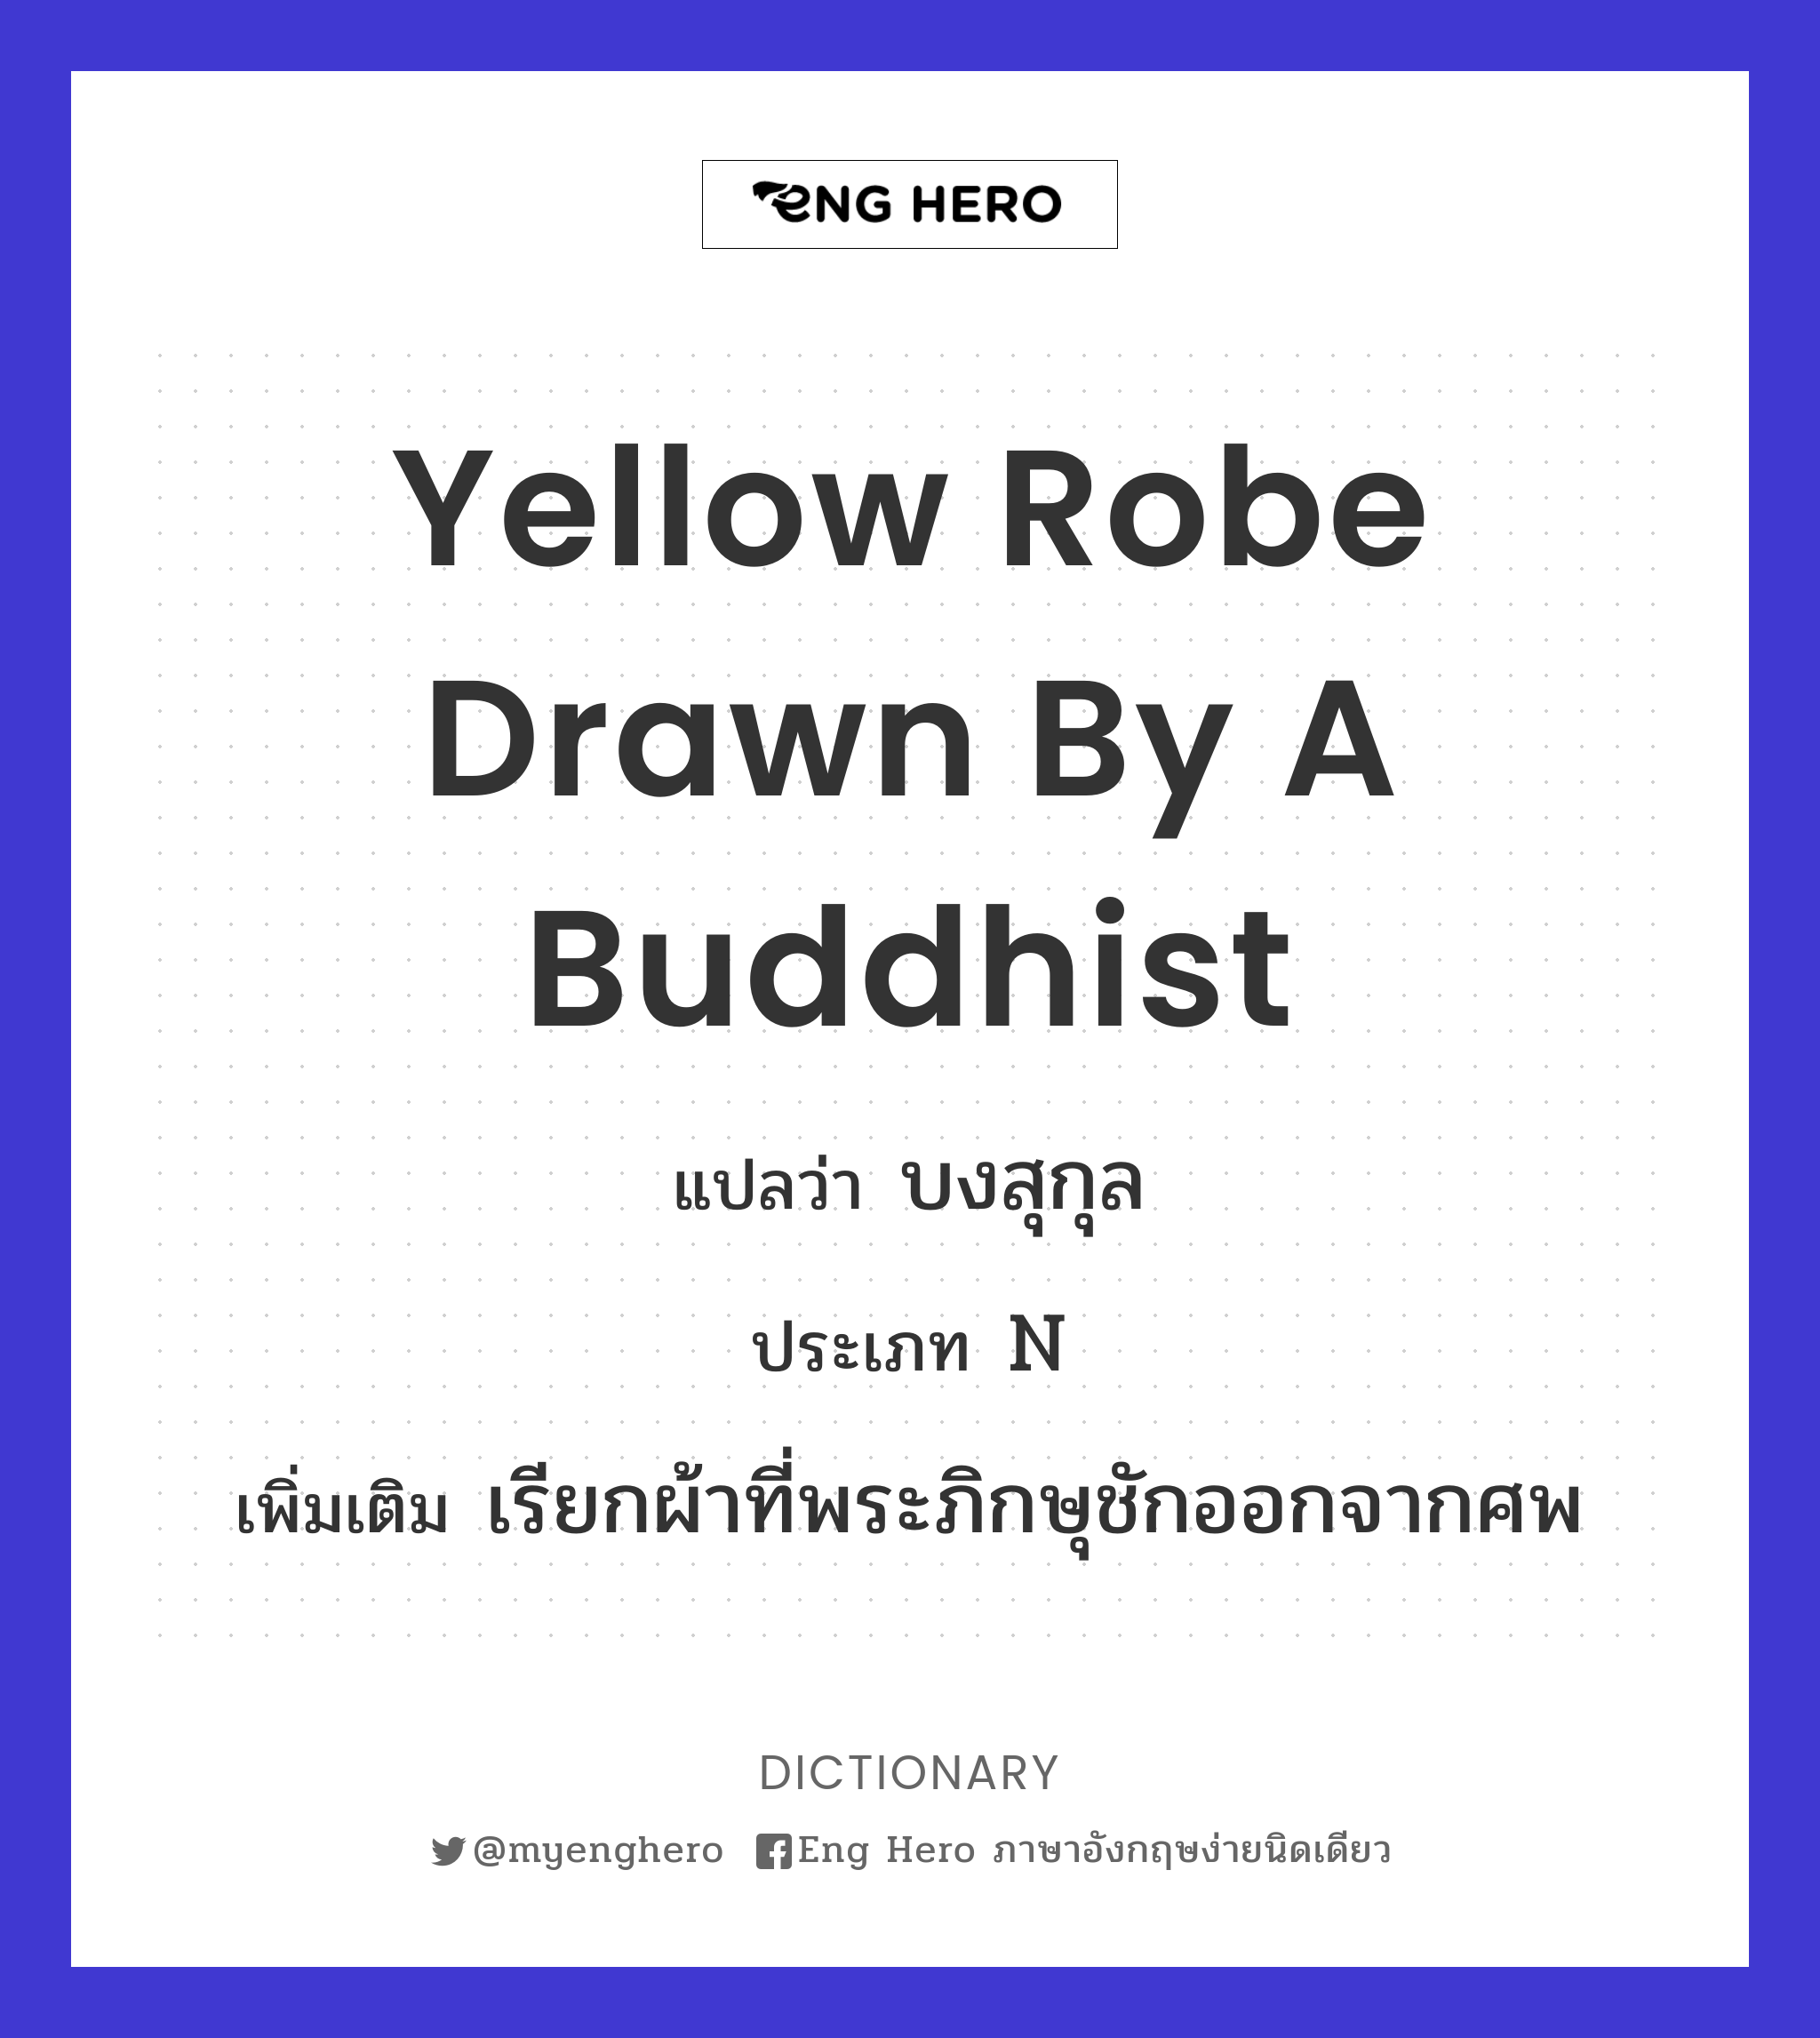 yellow robe drawn by a Buddhist